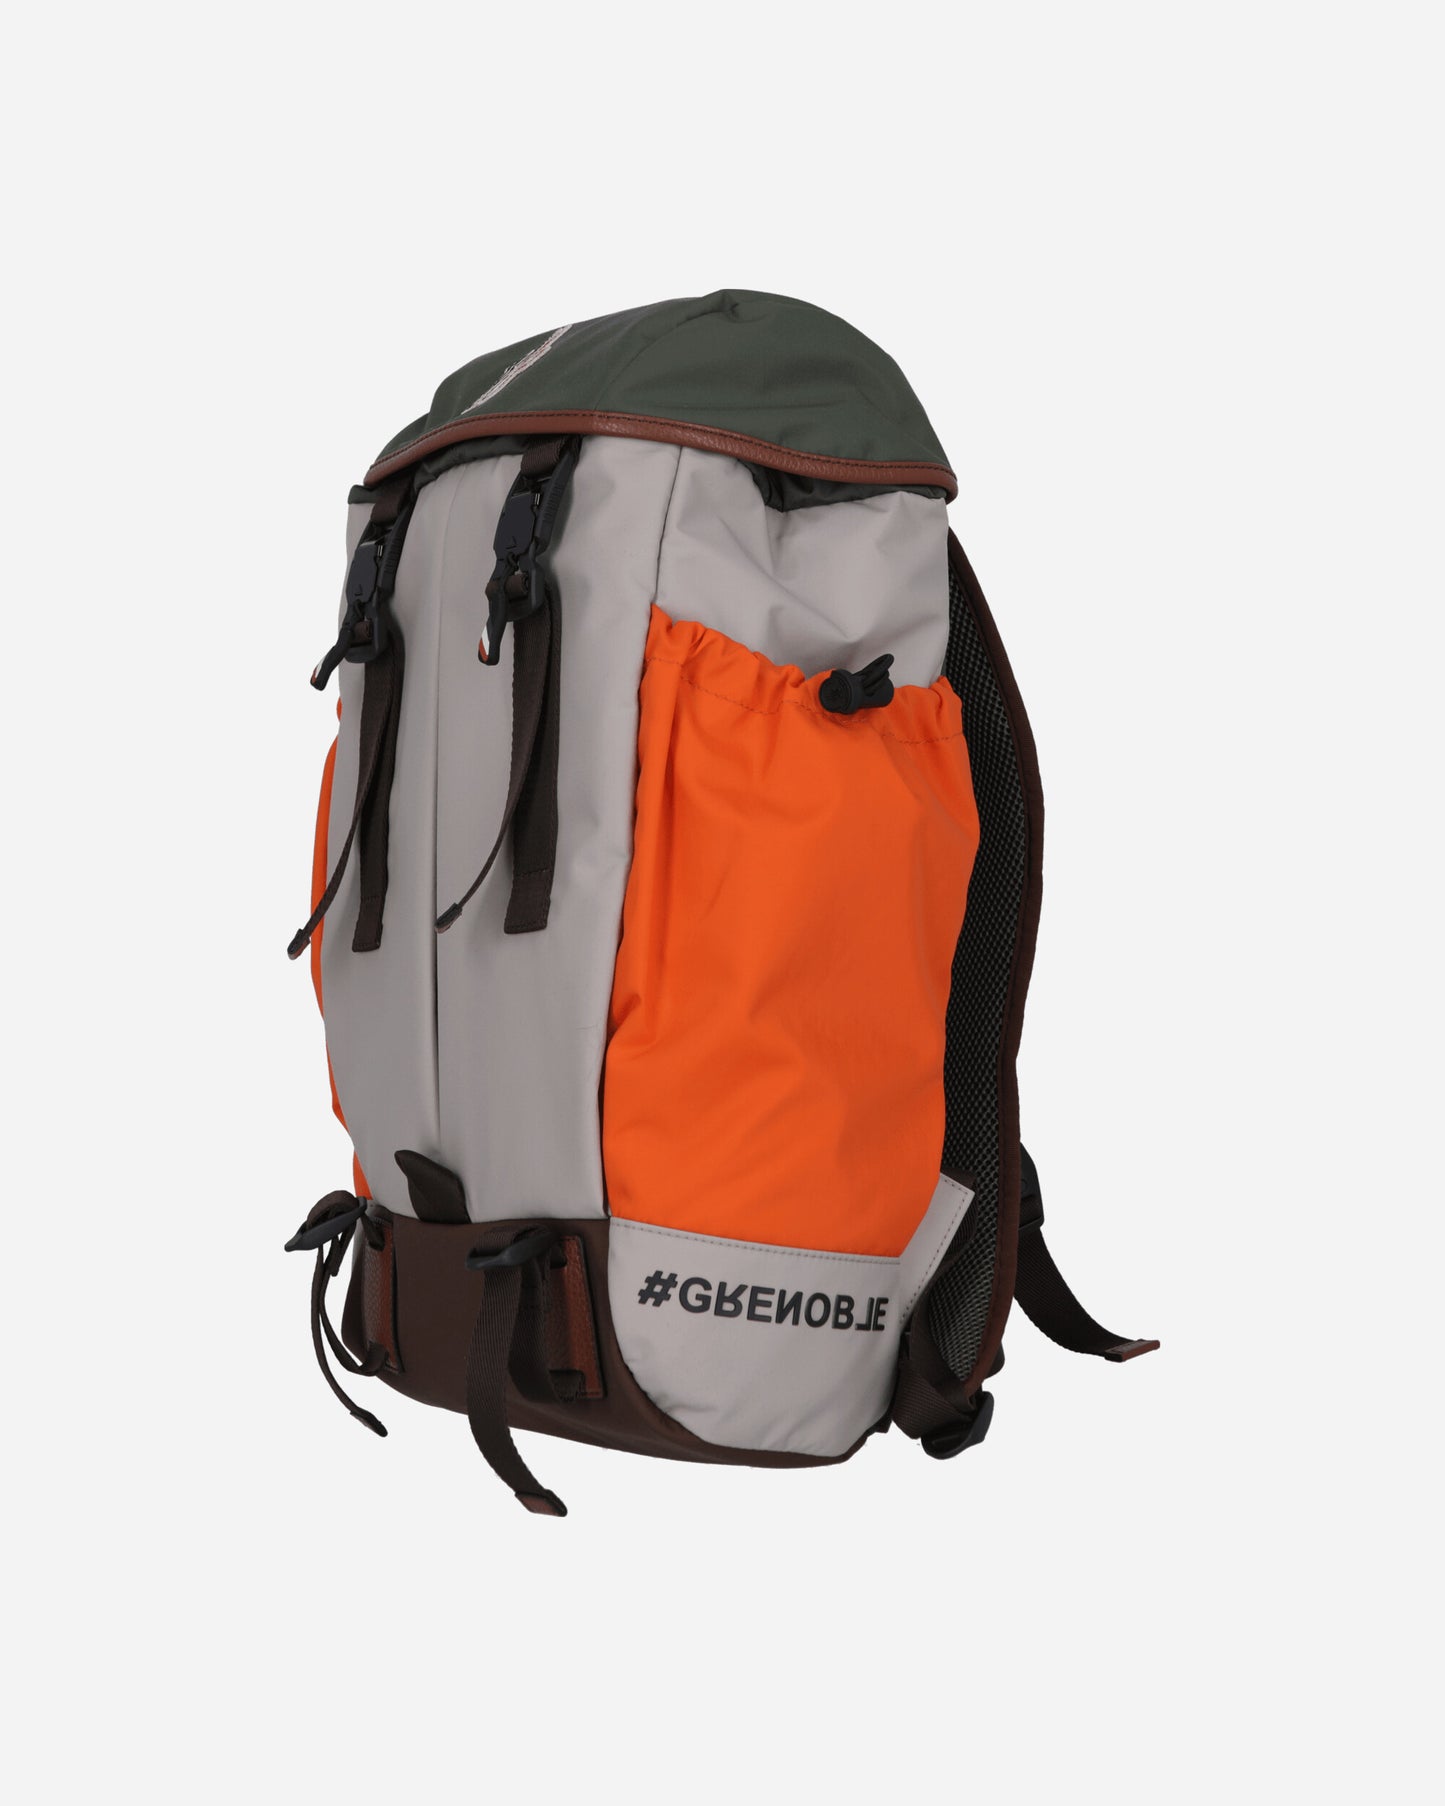 Moncler Grenoble Backpack Day-Namic Beige/Green/Orange Bags and Backpacks Backpacks 5A00002M4047 P13